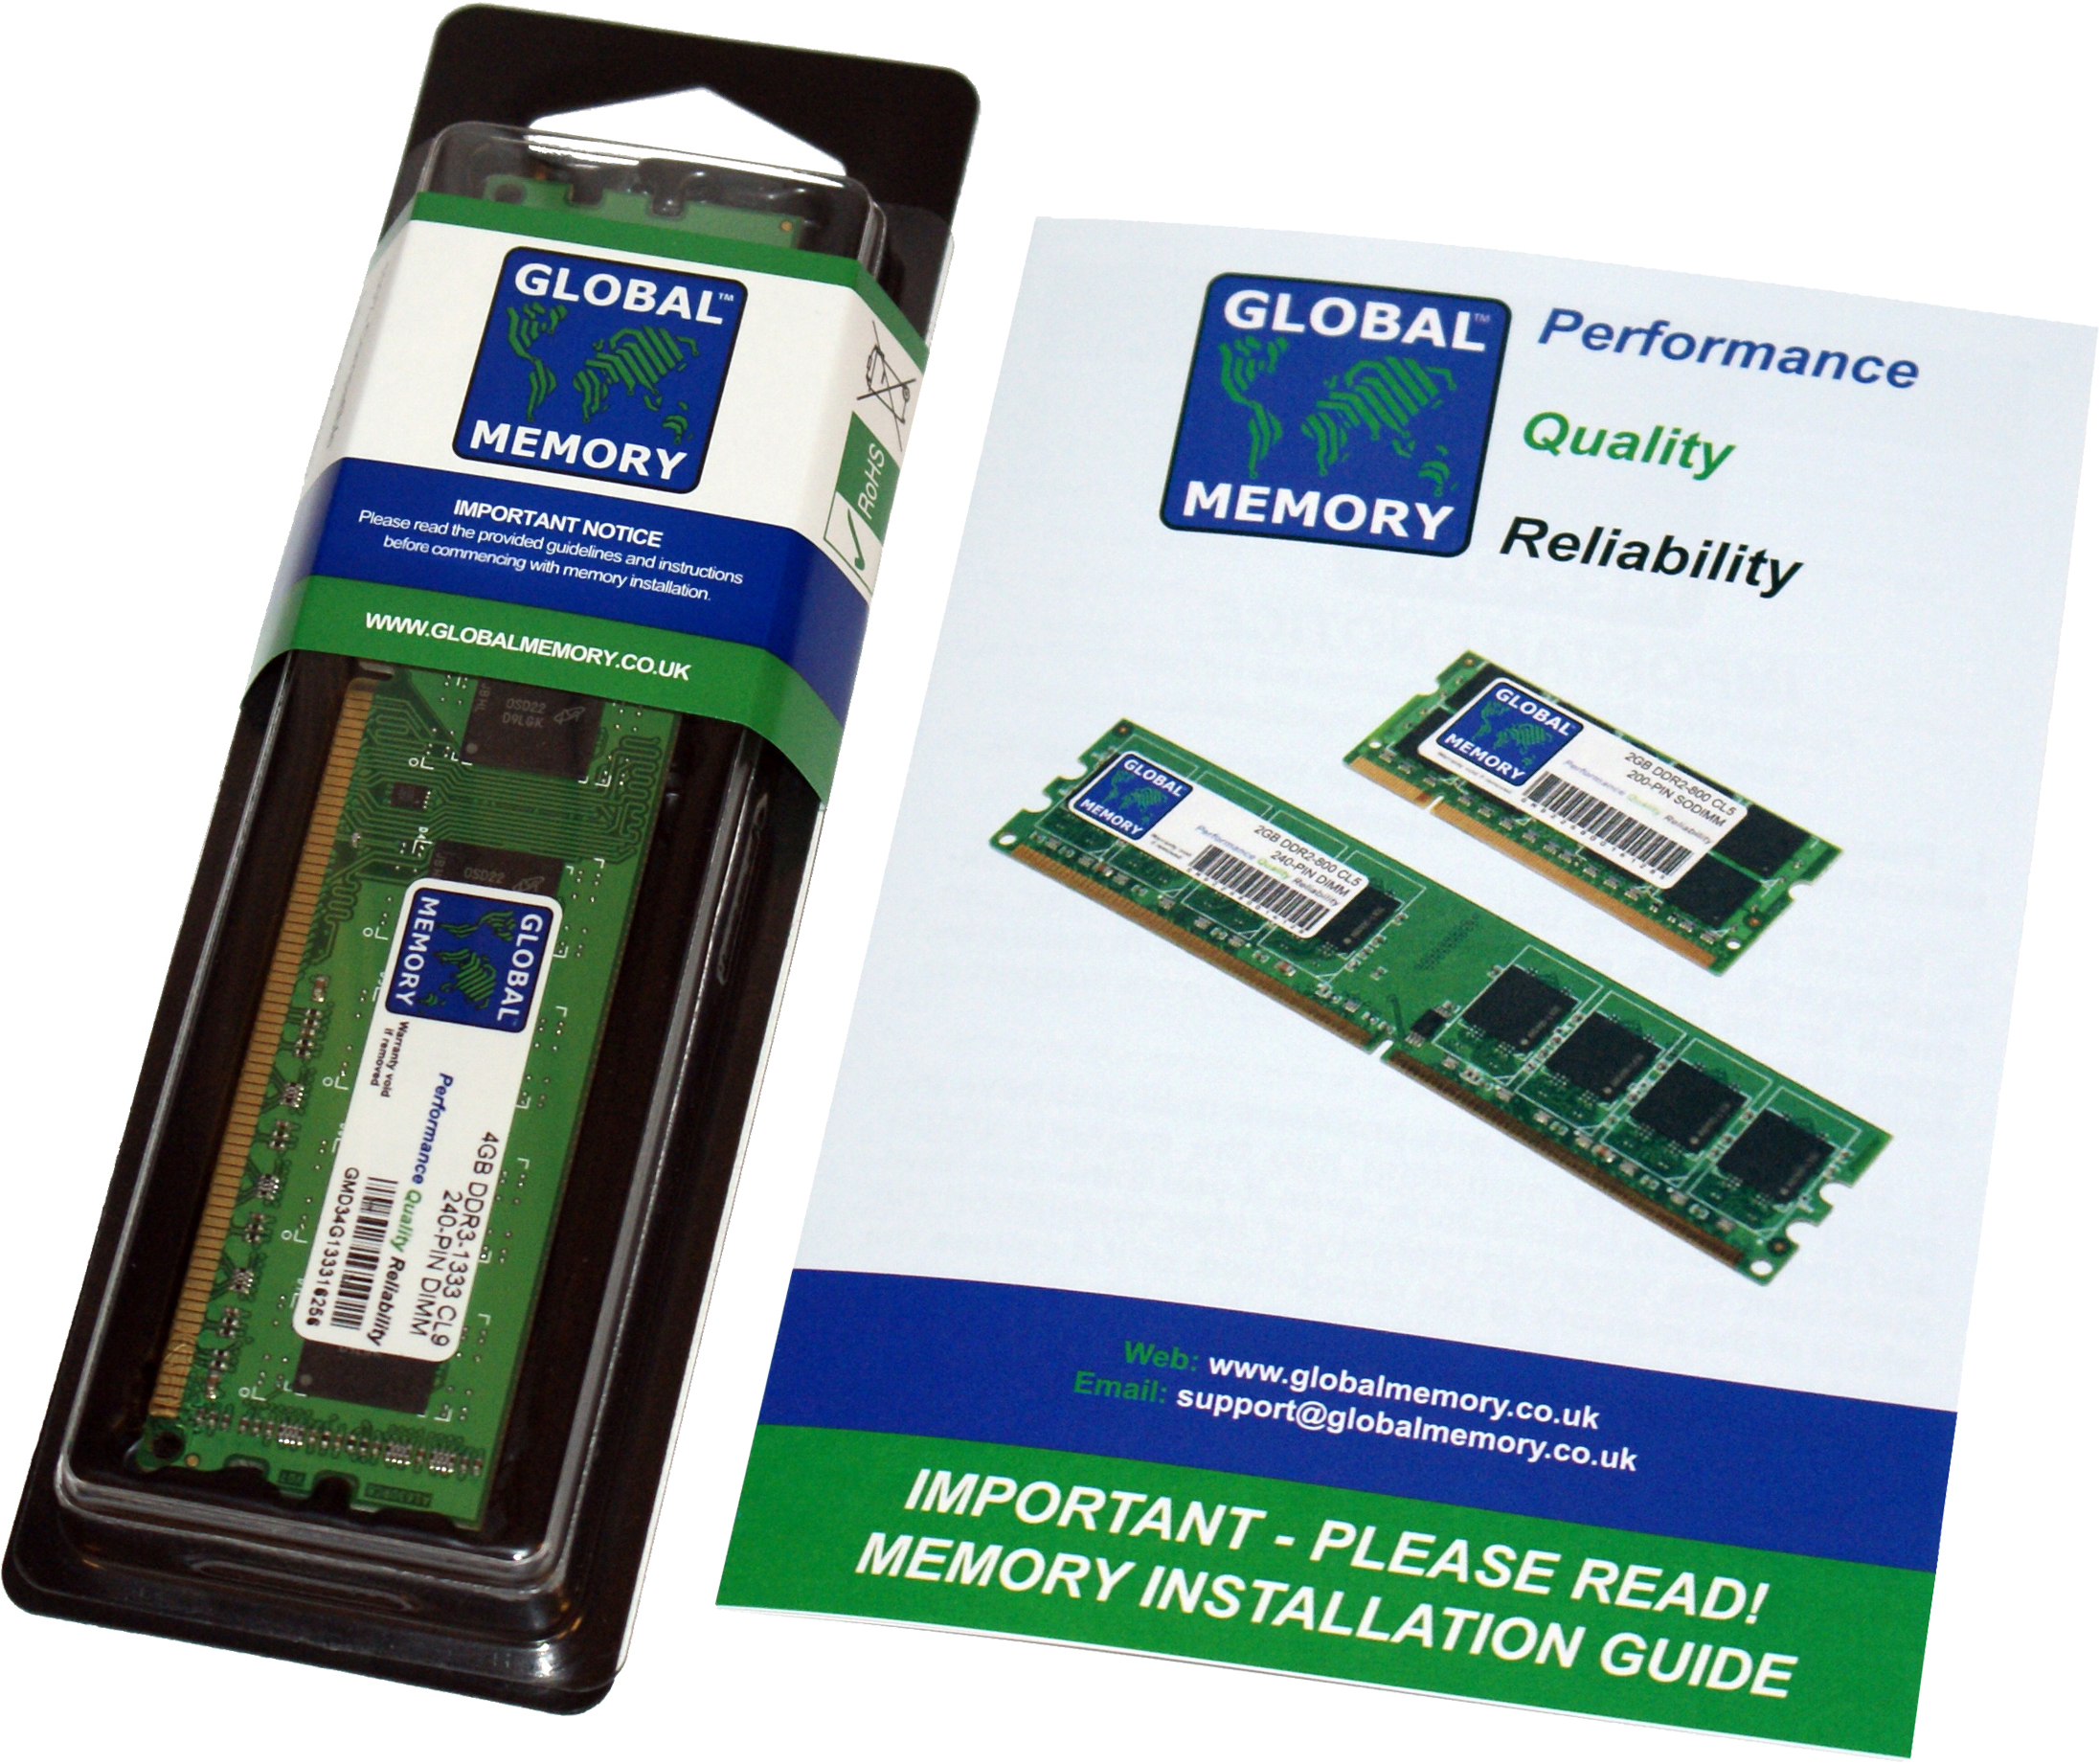 8GB DDR3 1866MHz PC3-14900 240-PIN DIMM MEMORY RAM FOR ADVENT DESKTOPS